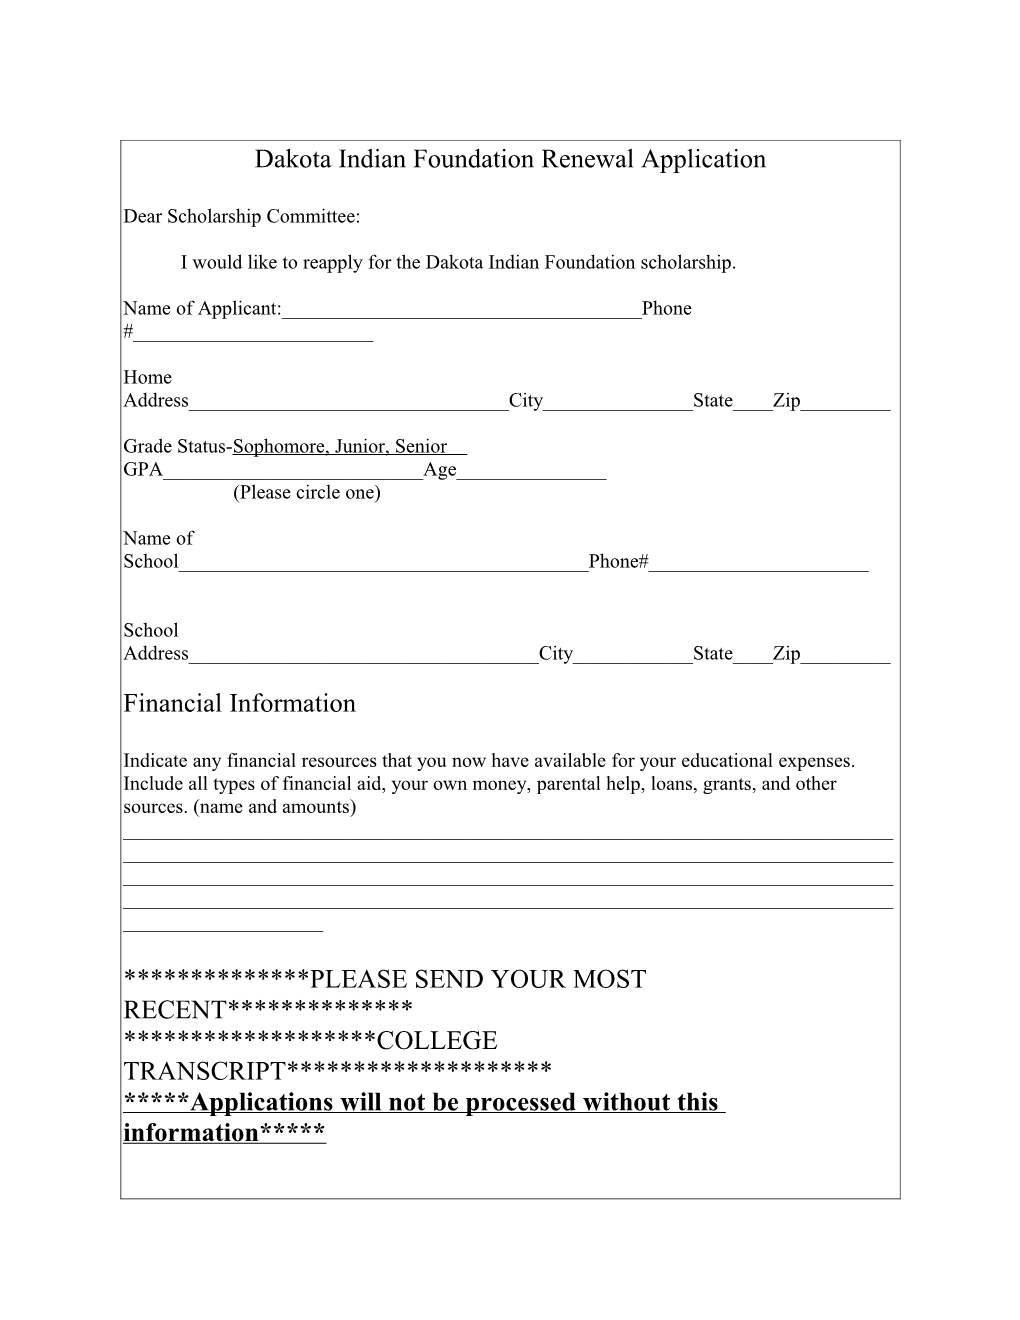 Dakota Indian Foundation Renewal Application